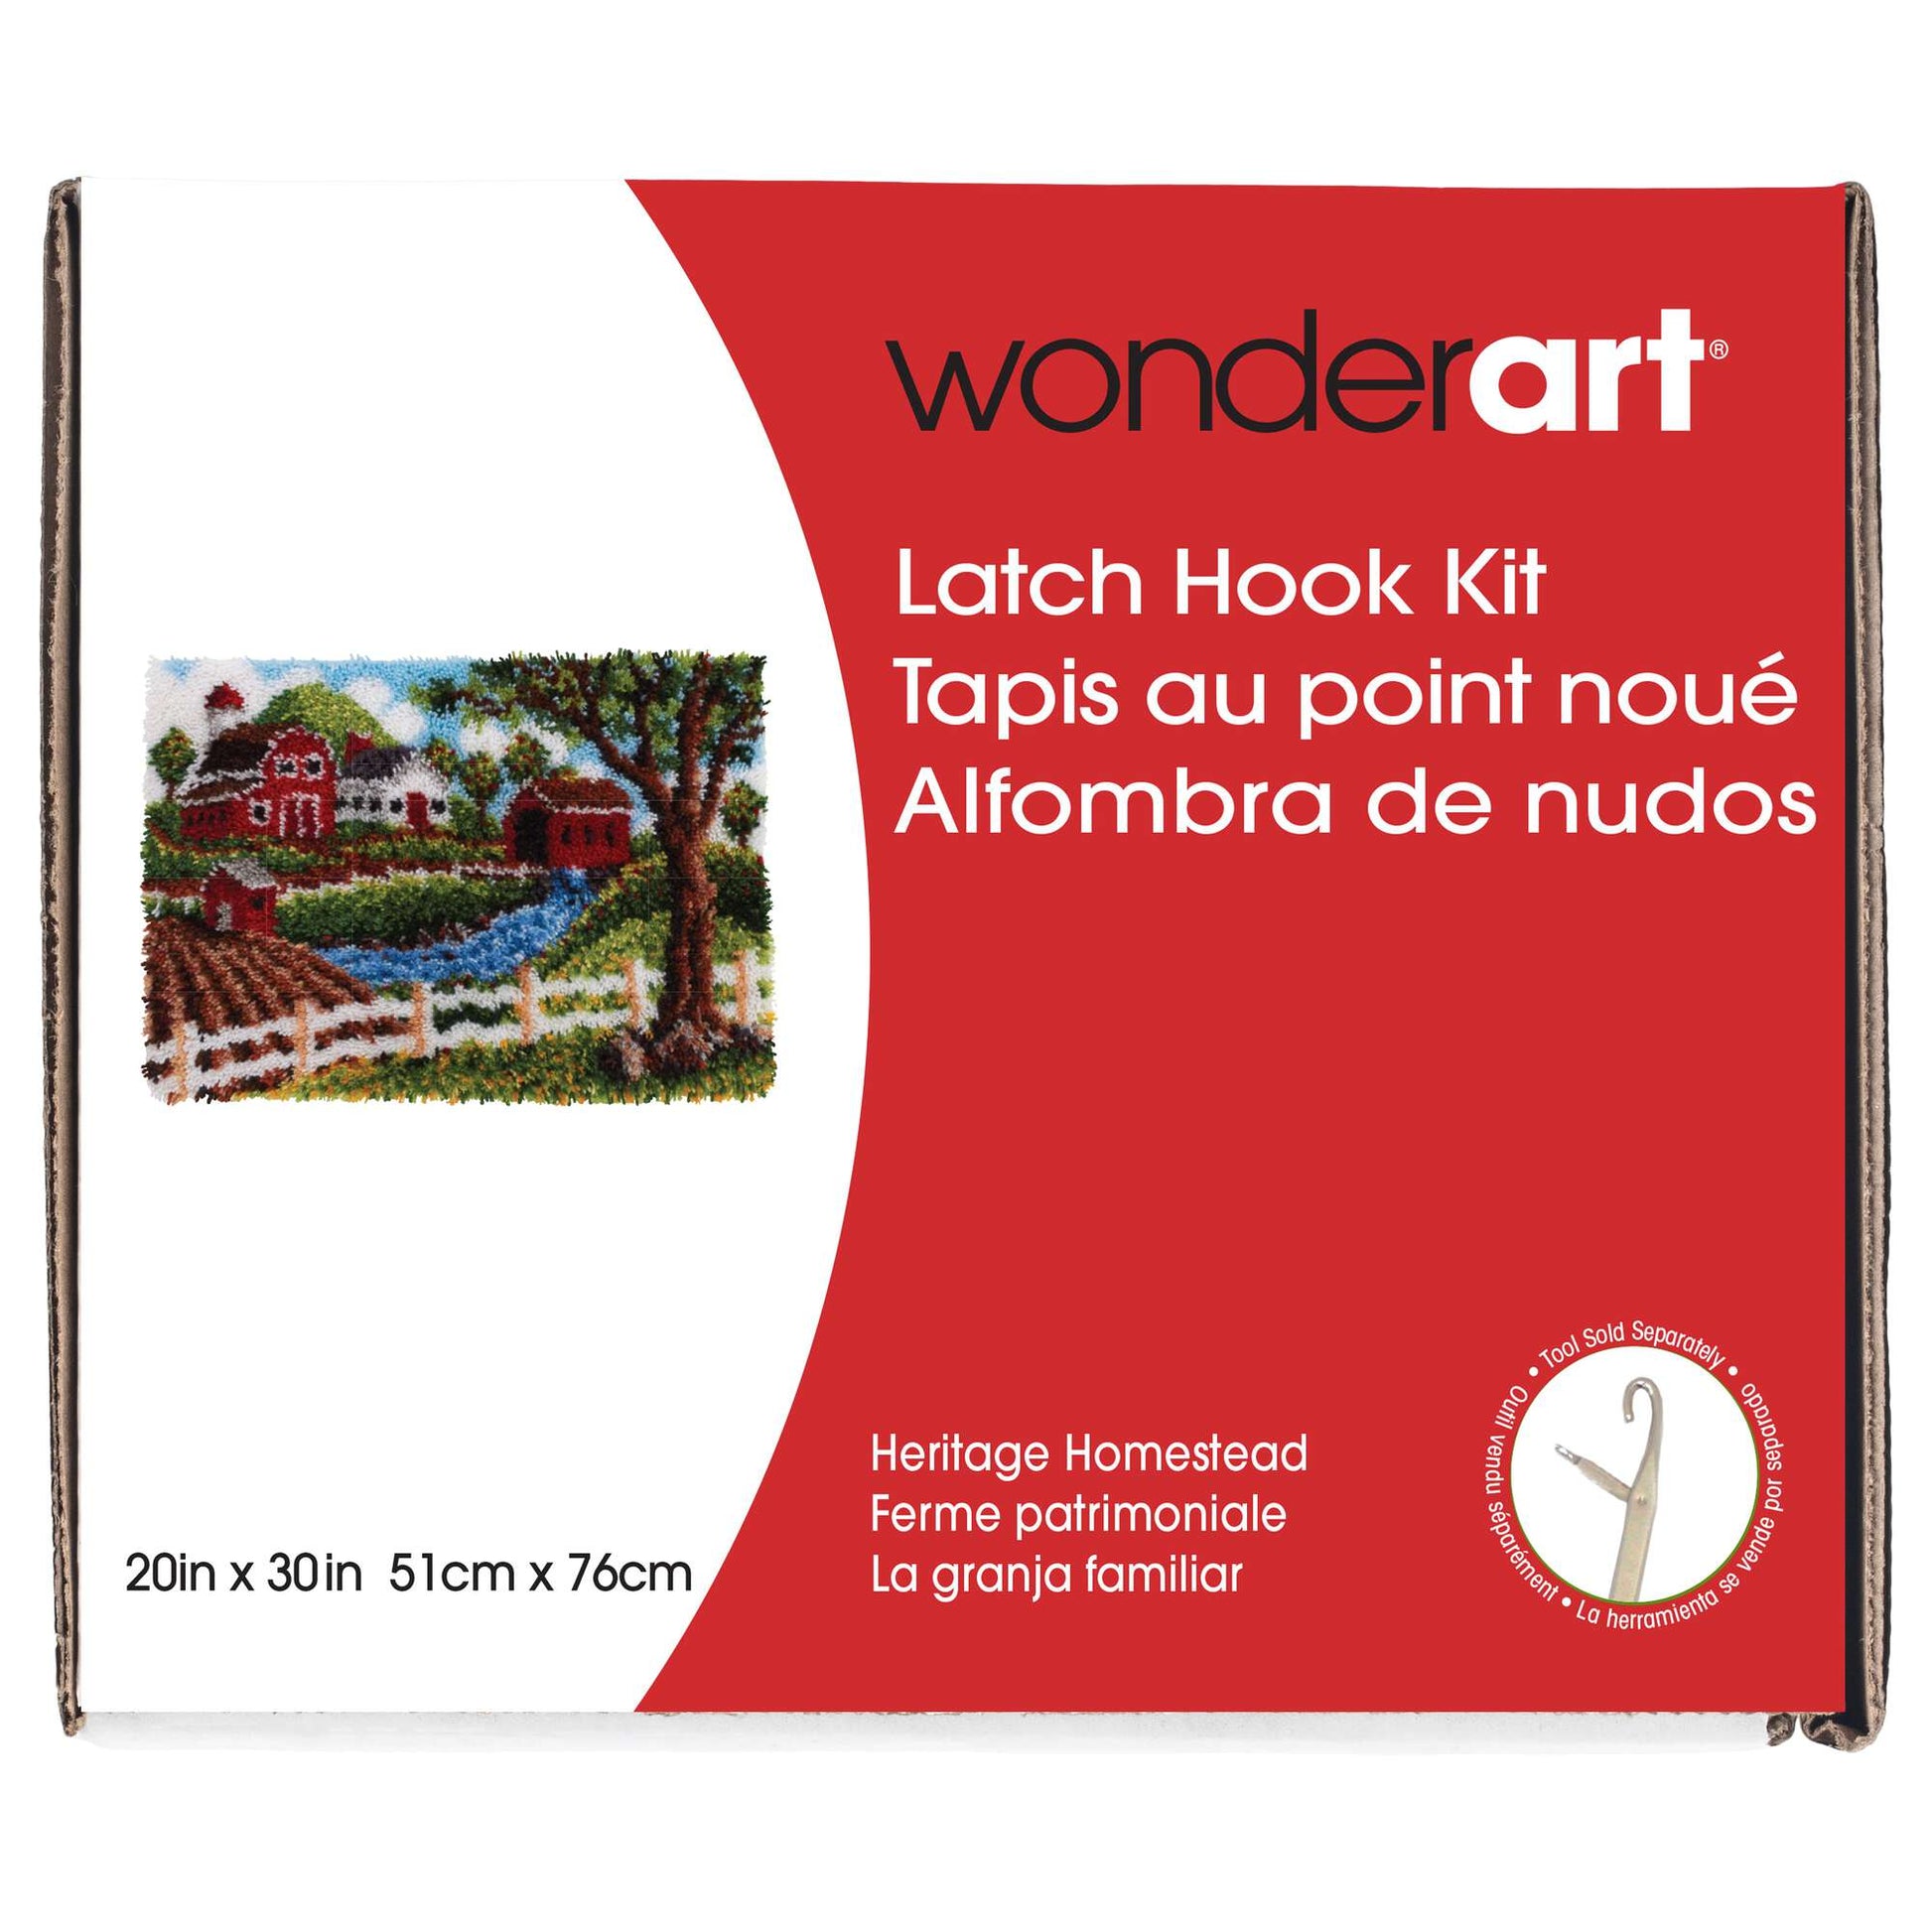 WonderArt Classic Heritage Homestead Kit 20" x 30", Clearance items